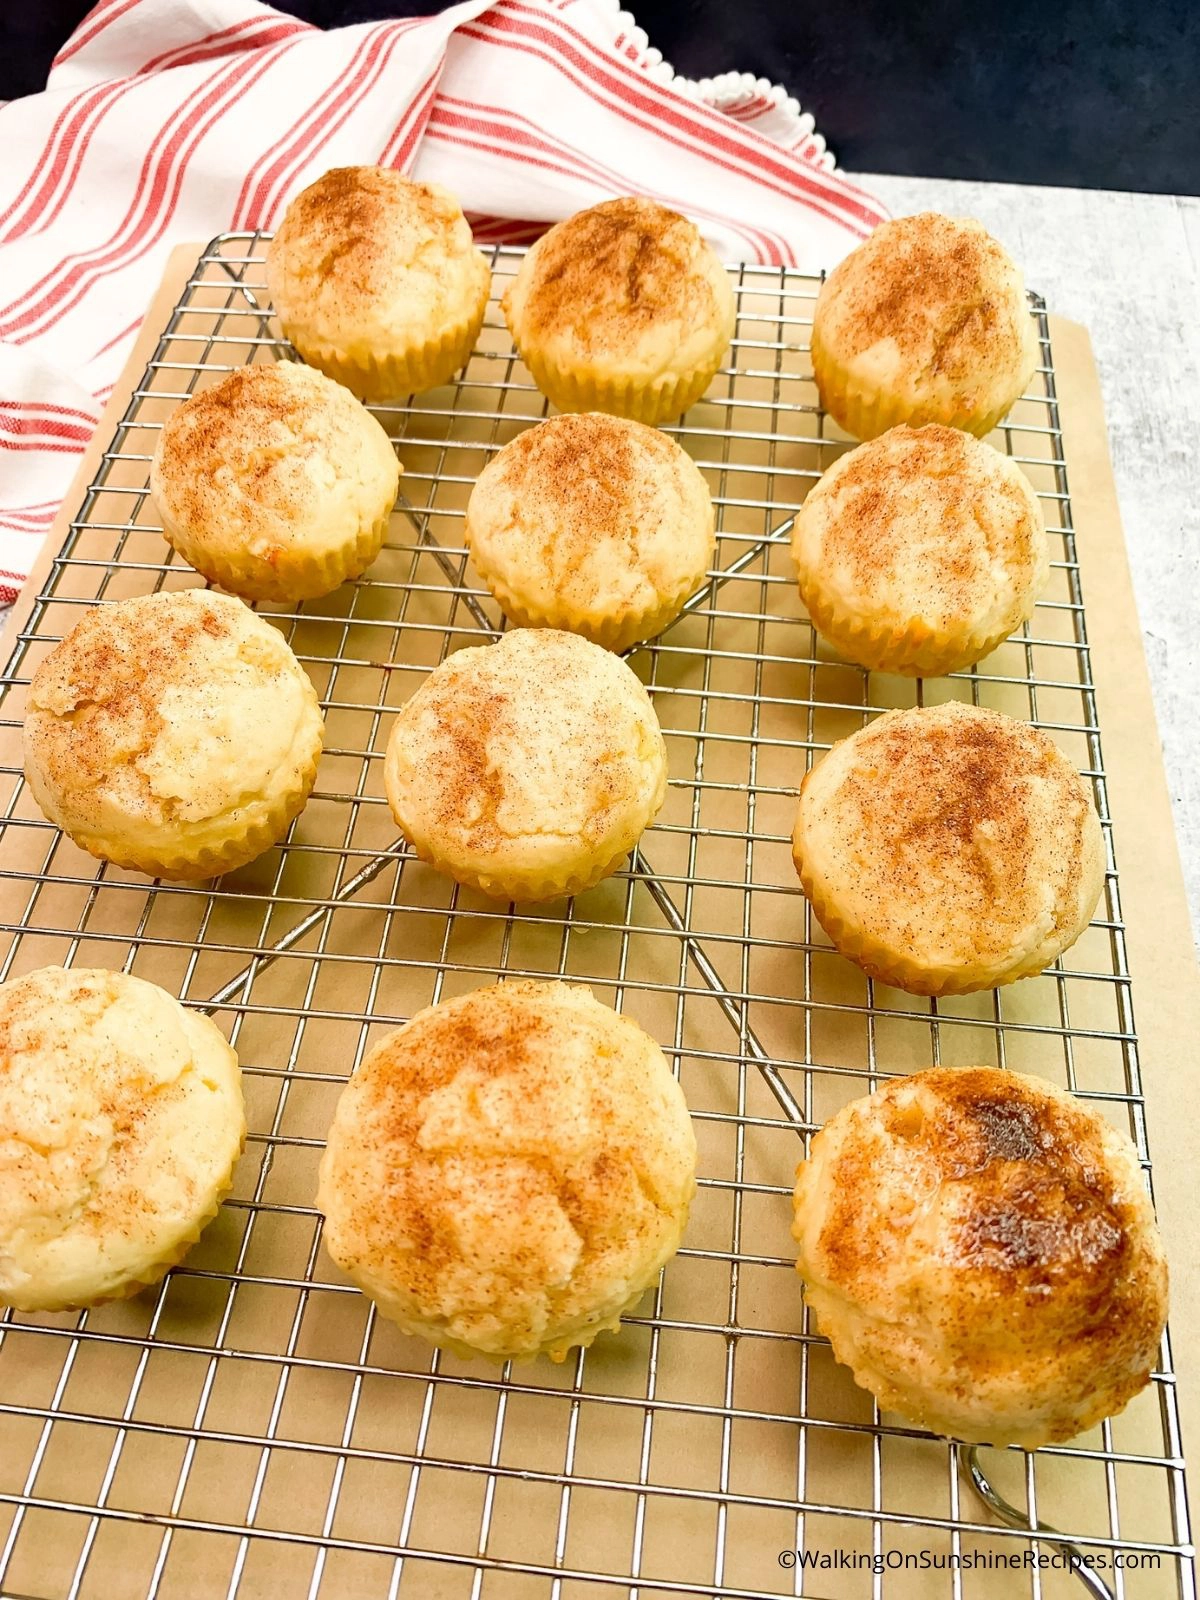 Basic Muffins with Cinnamon Sugar on top.